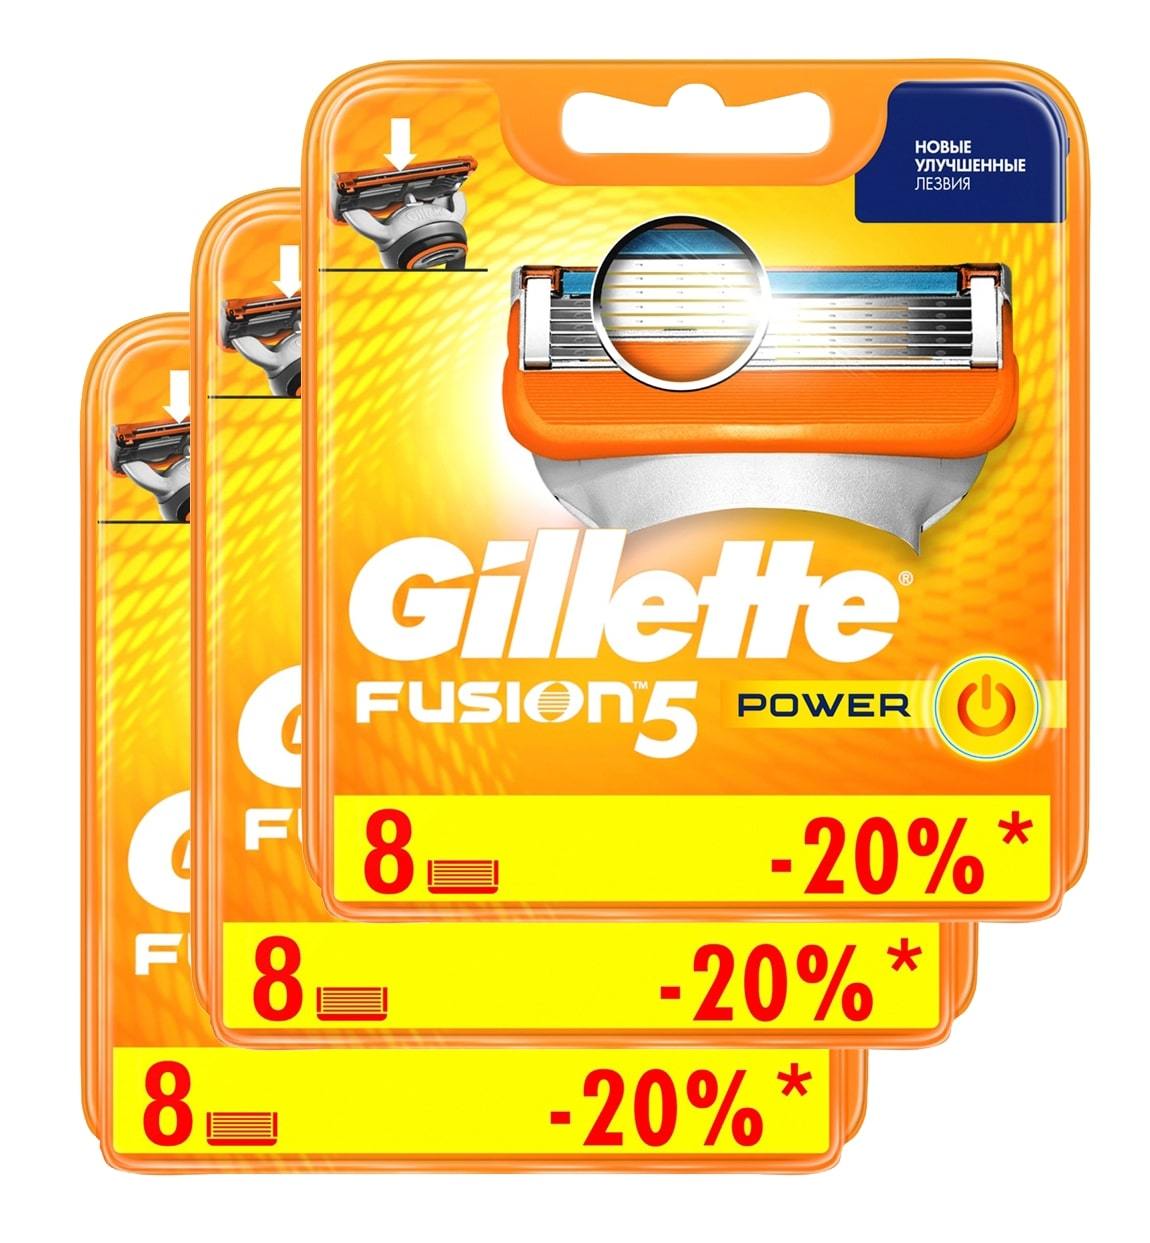 Gillette Fusion Power комплект (3х8) 24шт. (Цена за 1 пачку с учетом скидки 6% - 1457р.)